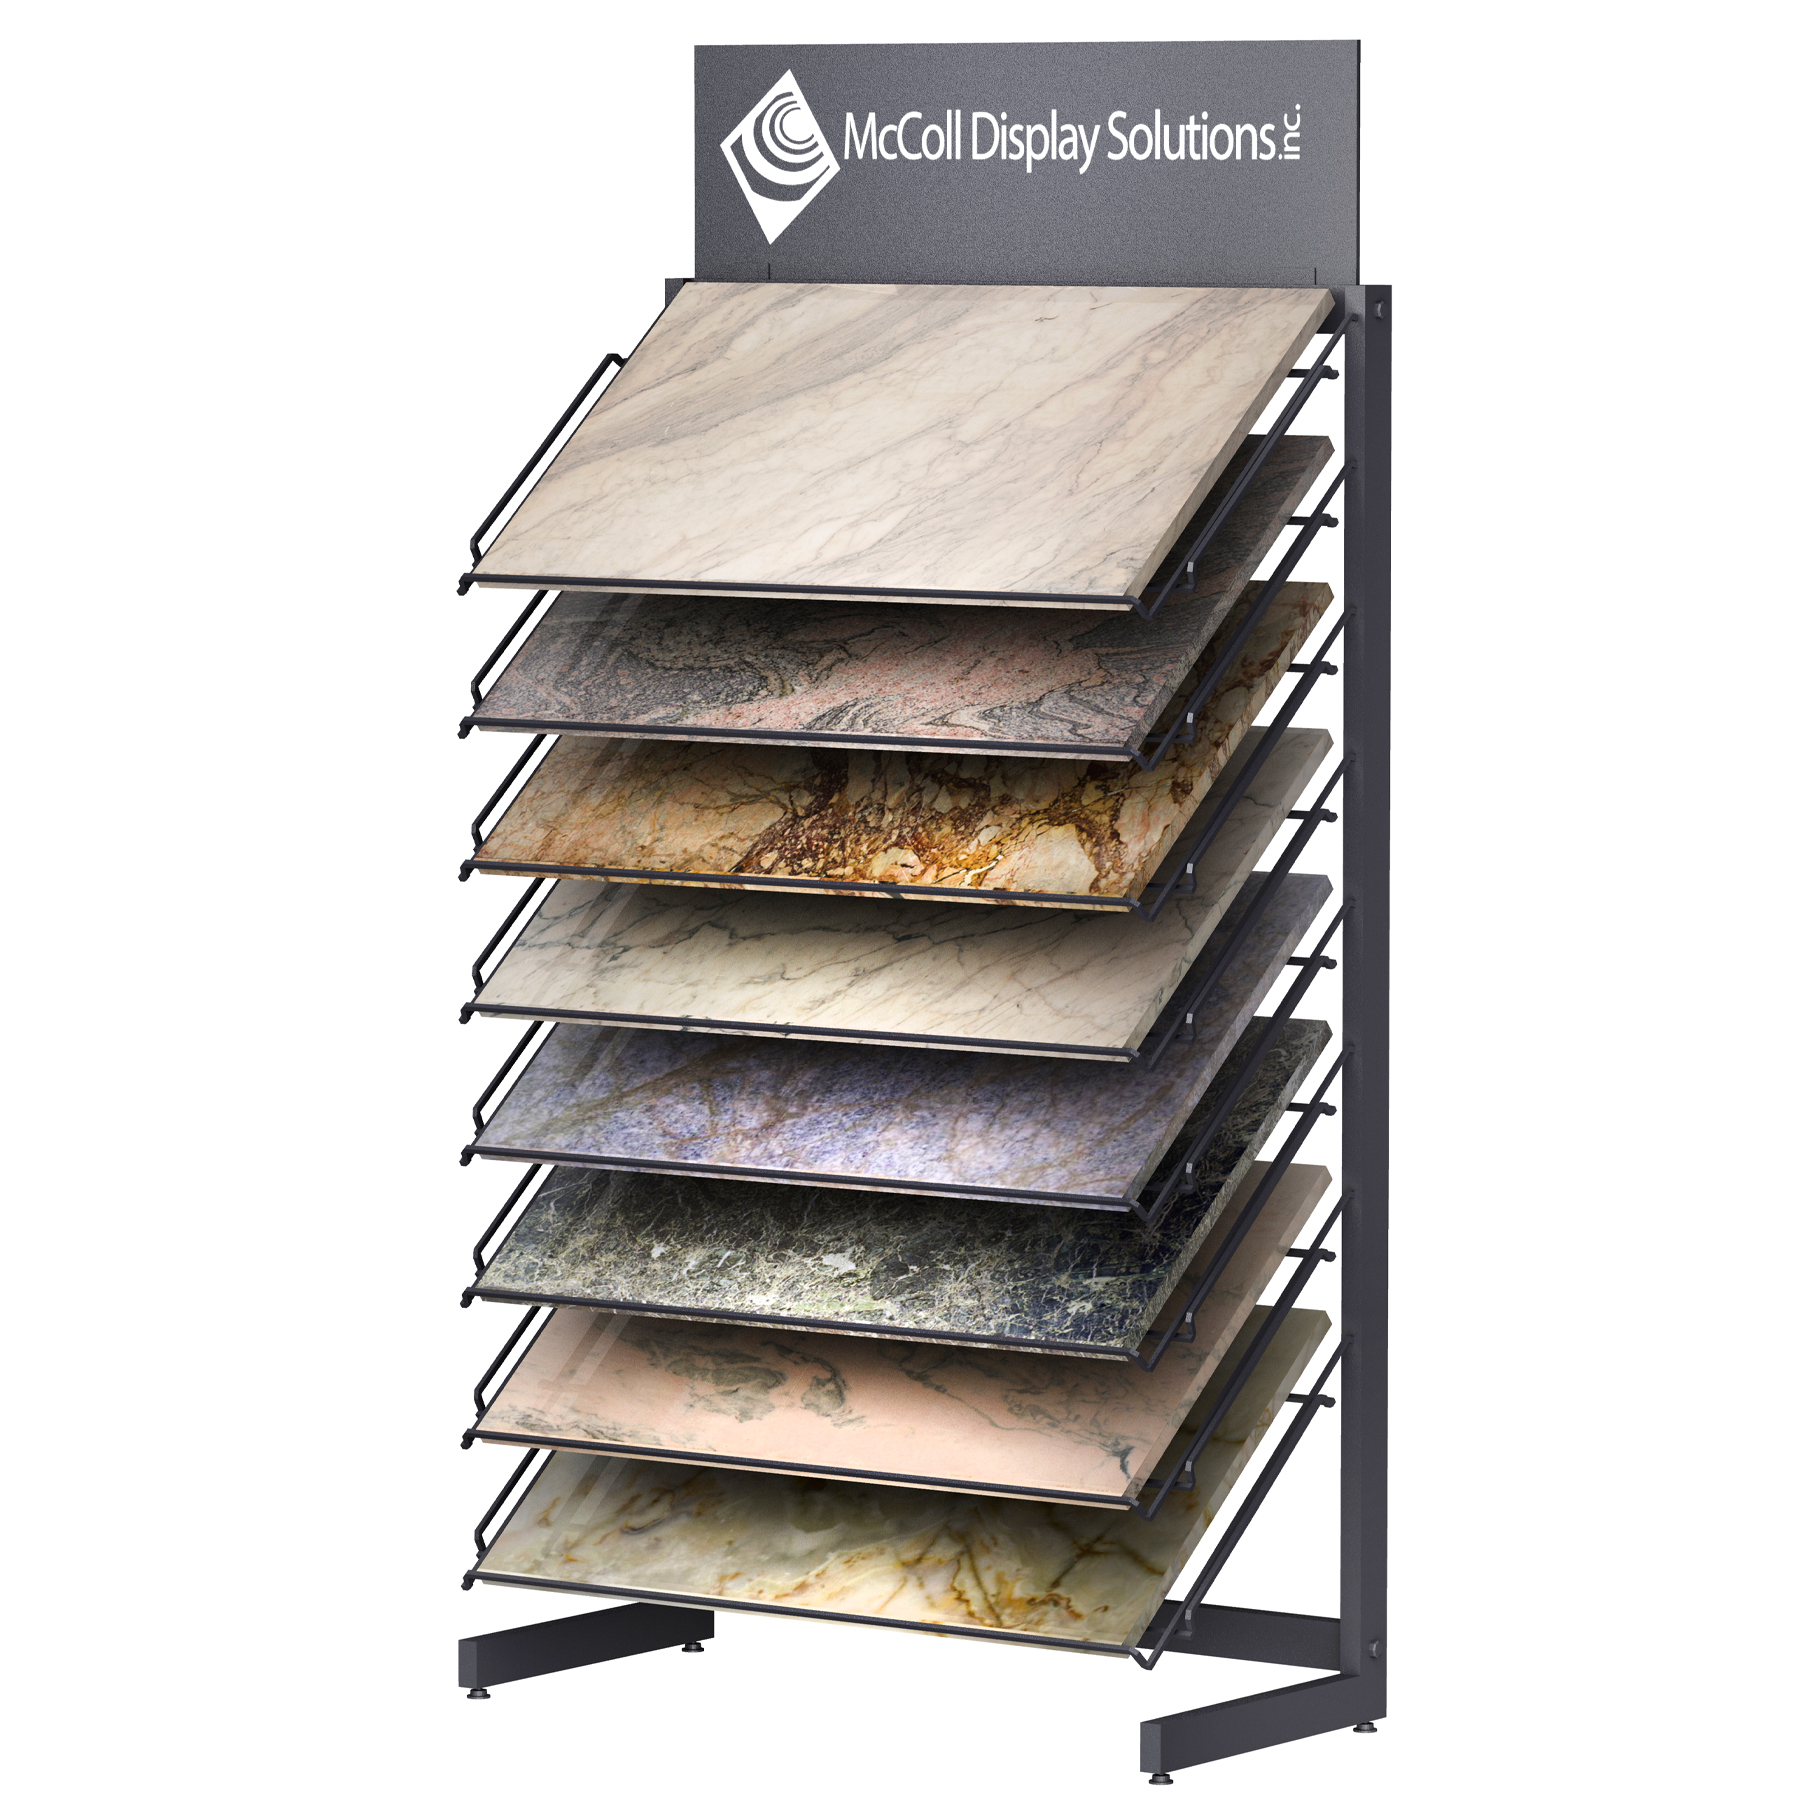 CD70 Tower Shelf System Quartz Marble Stone Pavers Veneer Brick Sturdy Steel Shelves Showroom Displays McColl Display